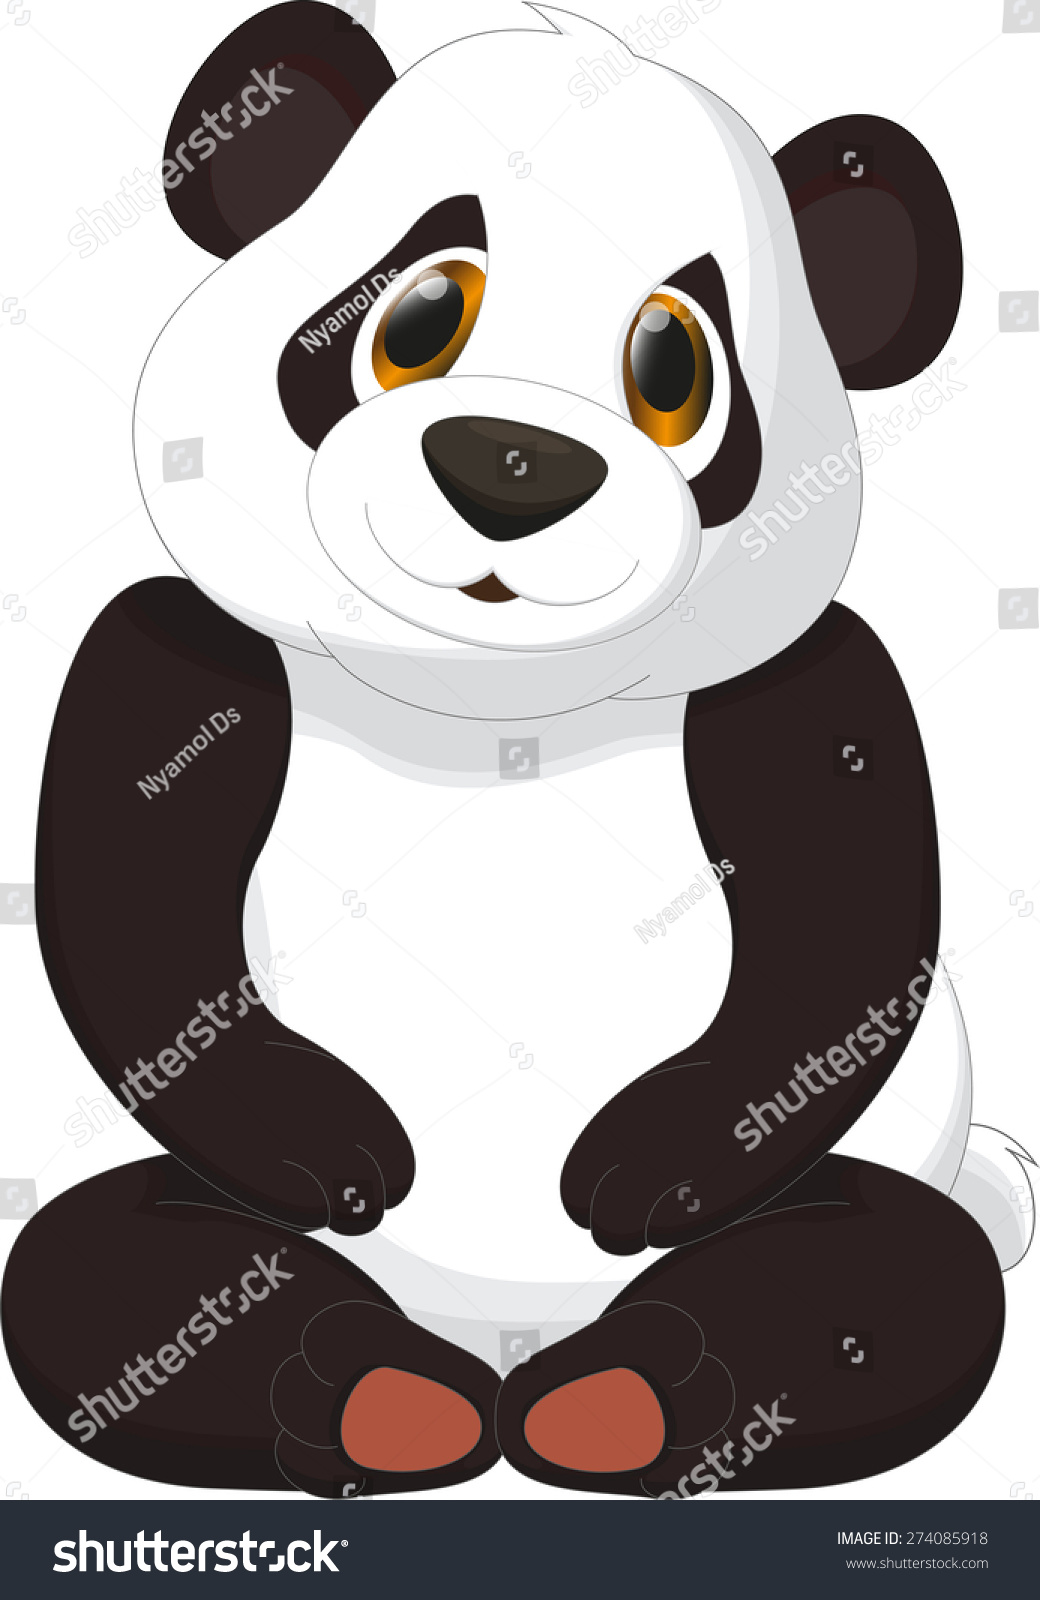 Cute Panda Cartoon Stock Photo 274085918 : Shutterstock